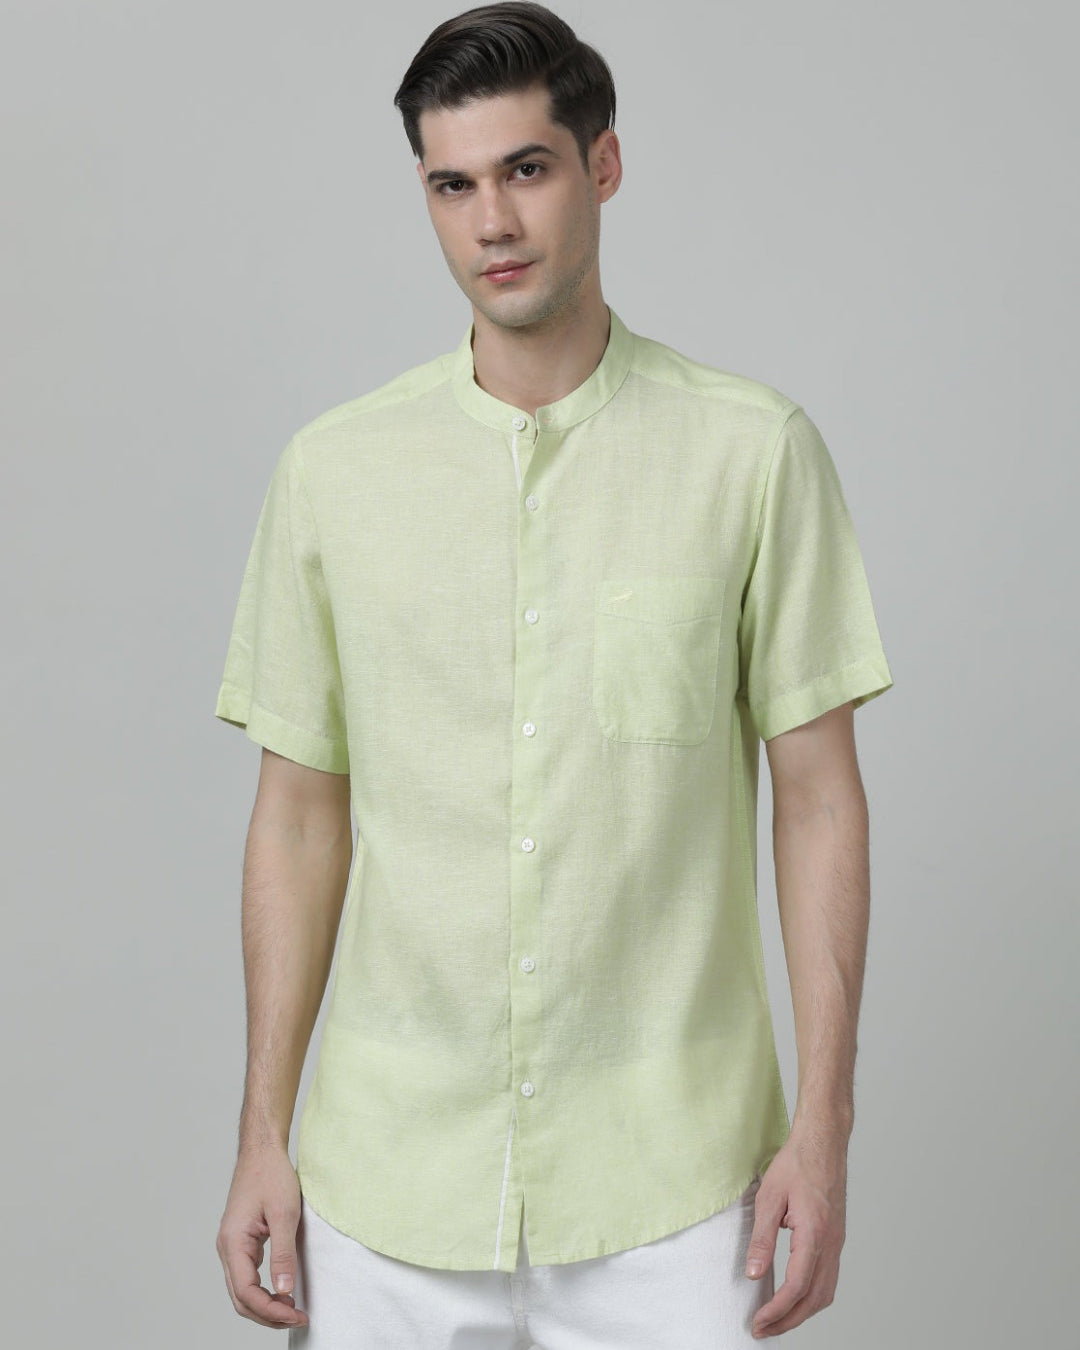 Crocodile Men's Half Sleeve Shirt